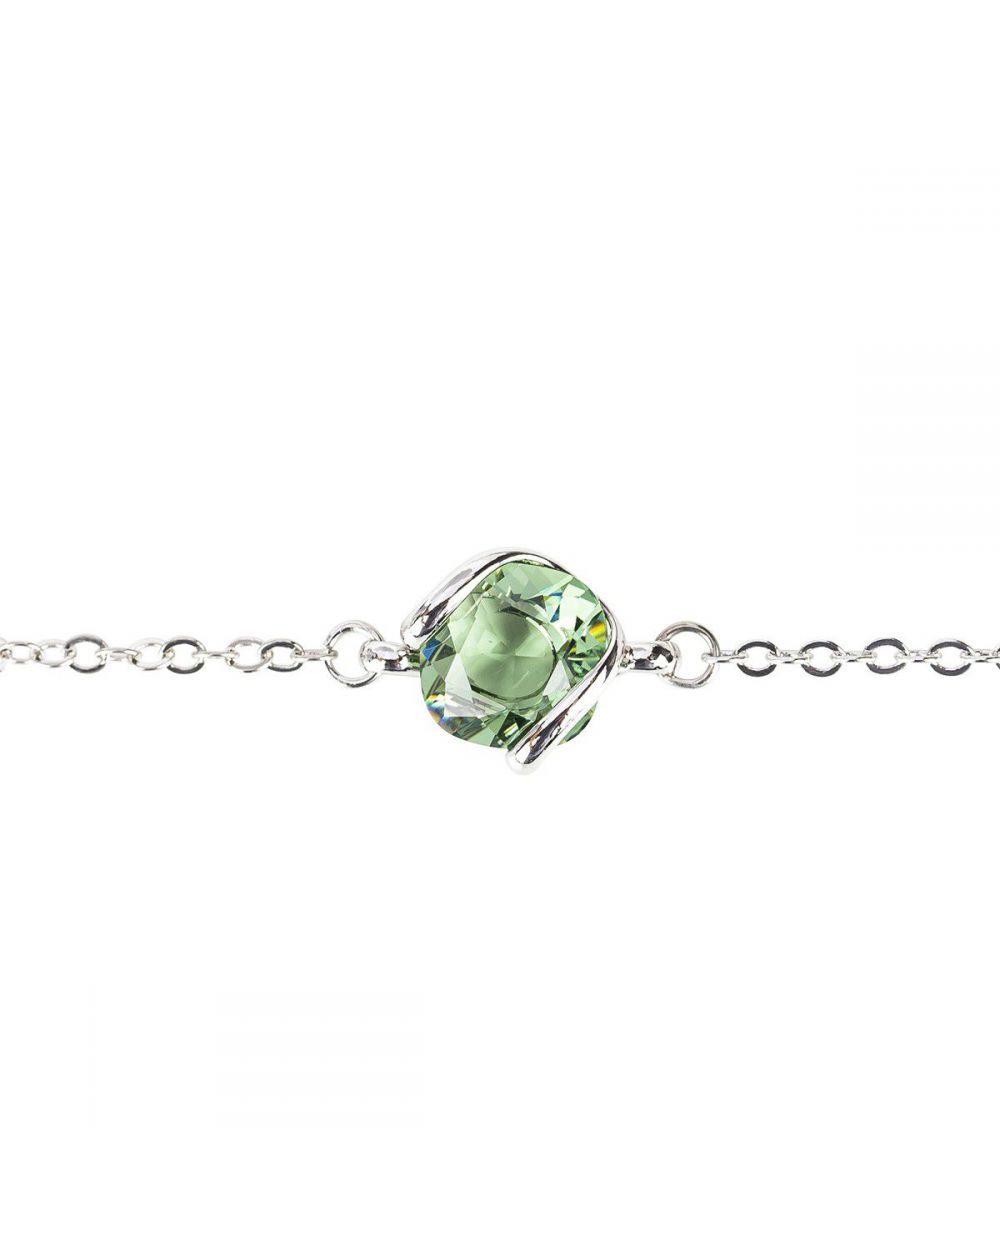 Andrea Marazzini bijoux - Bracelet cristal Swarovski Mini Erinite